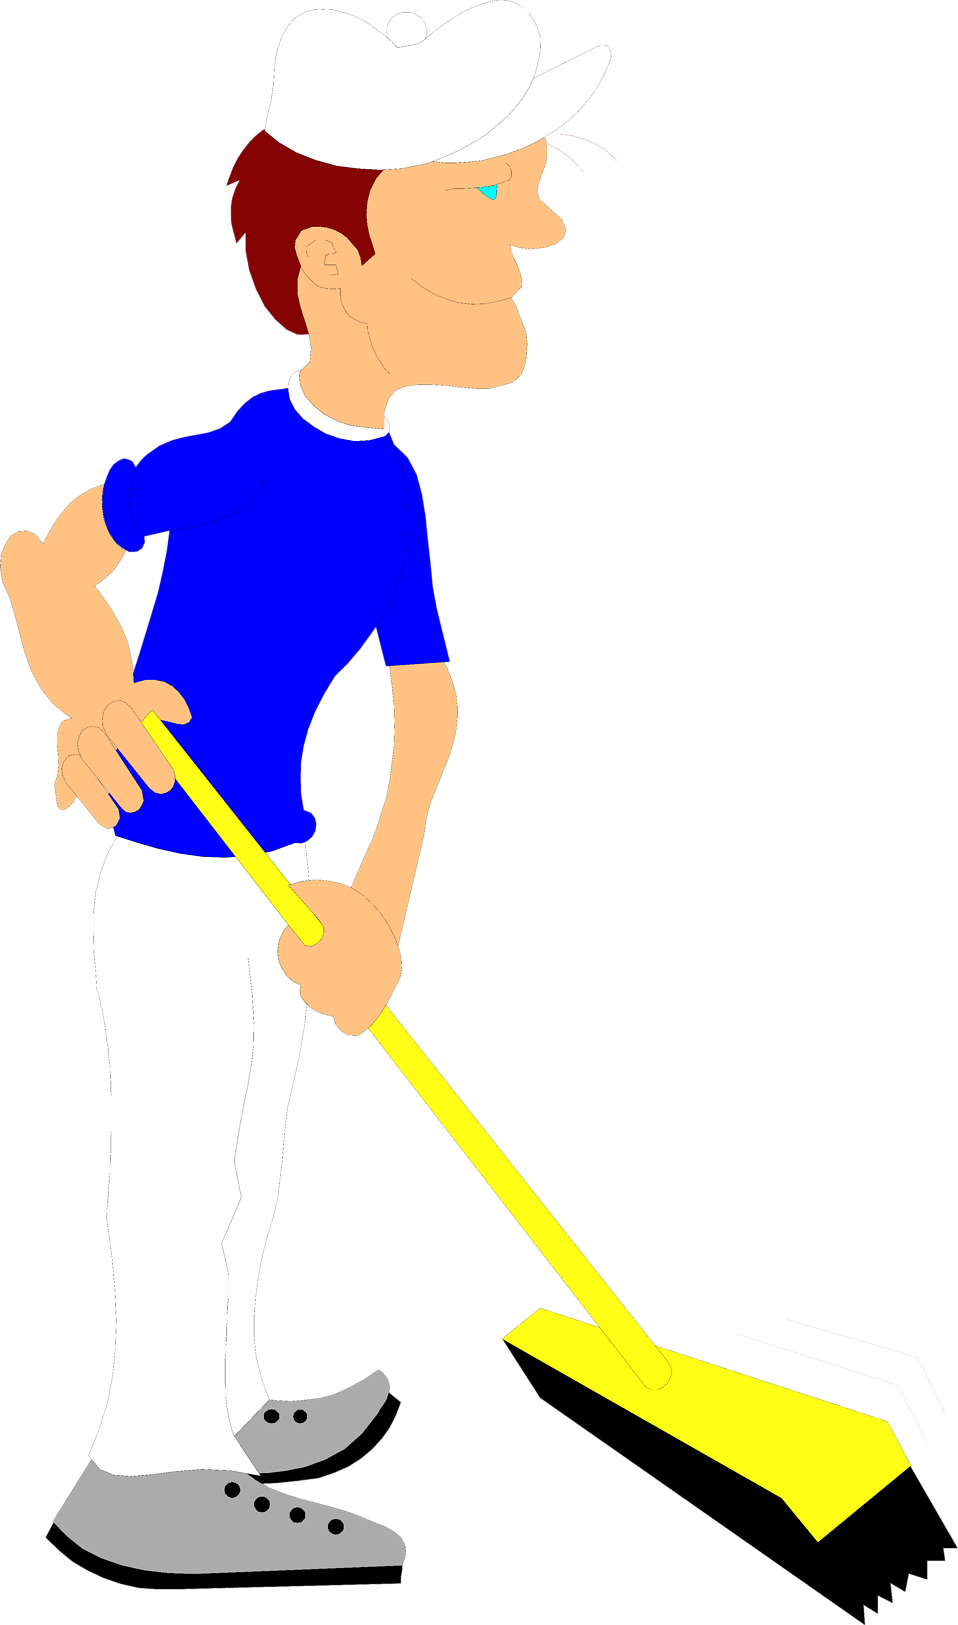 Cartoon A Cartoon Of A Man Holding A Broom